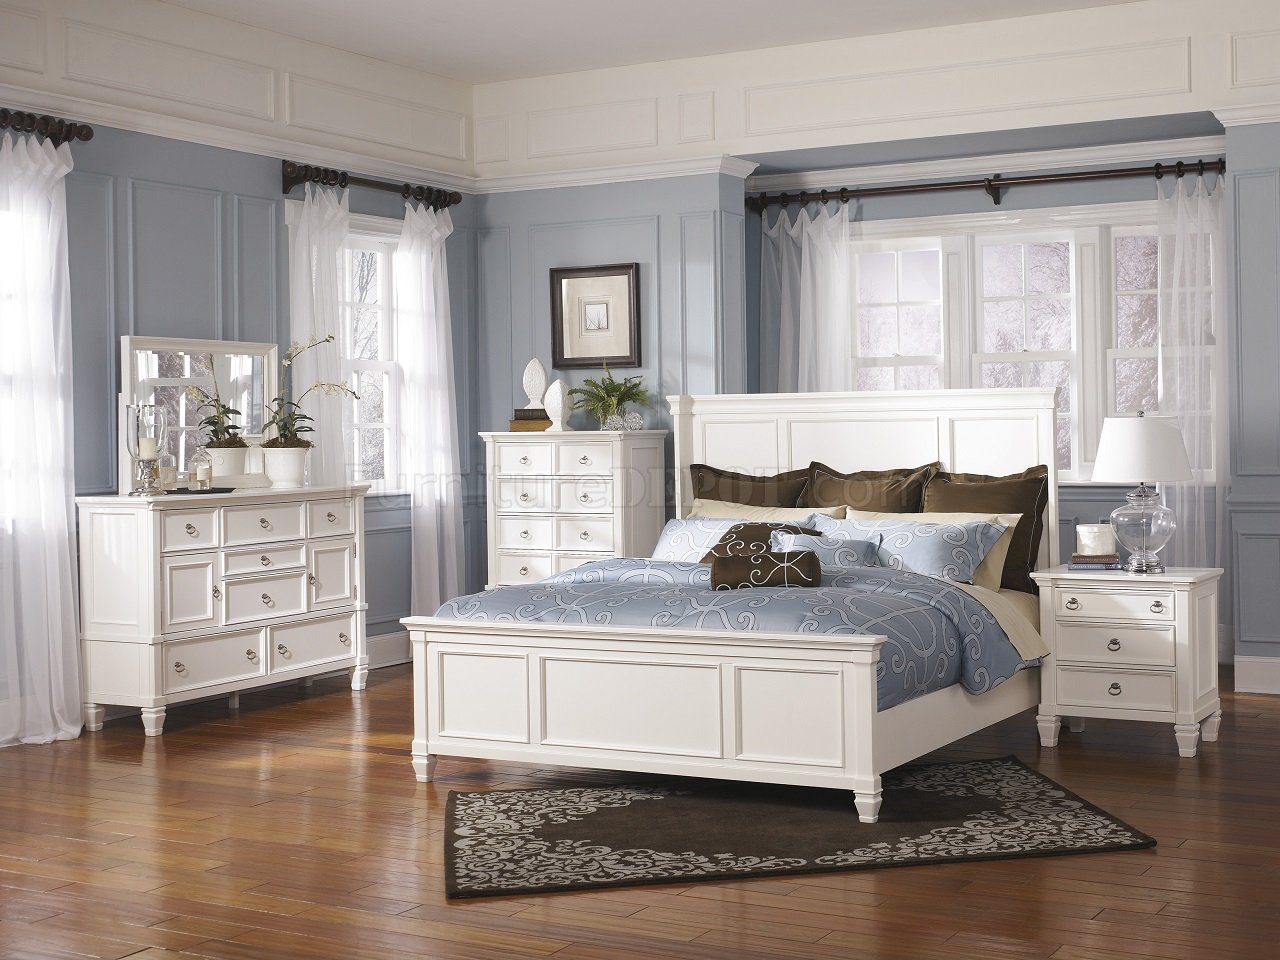 prentice ashley bedroom furniture